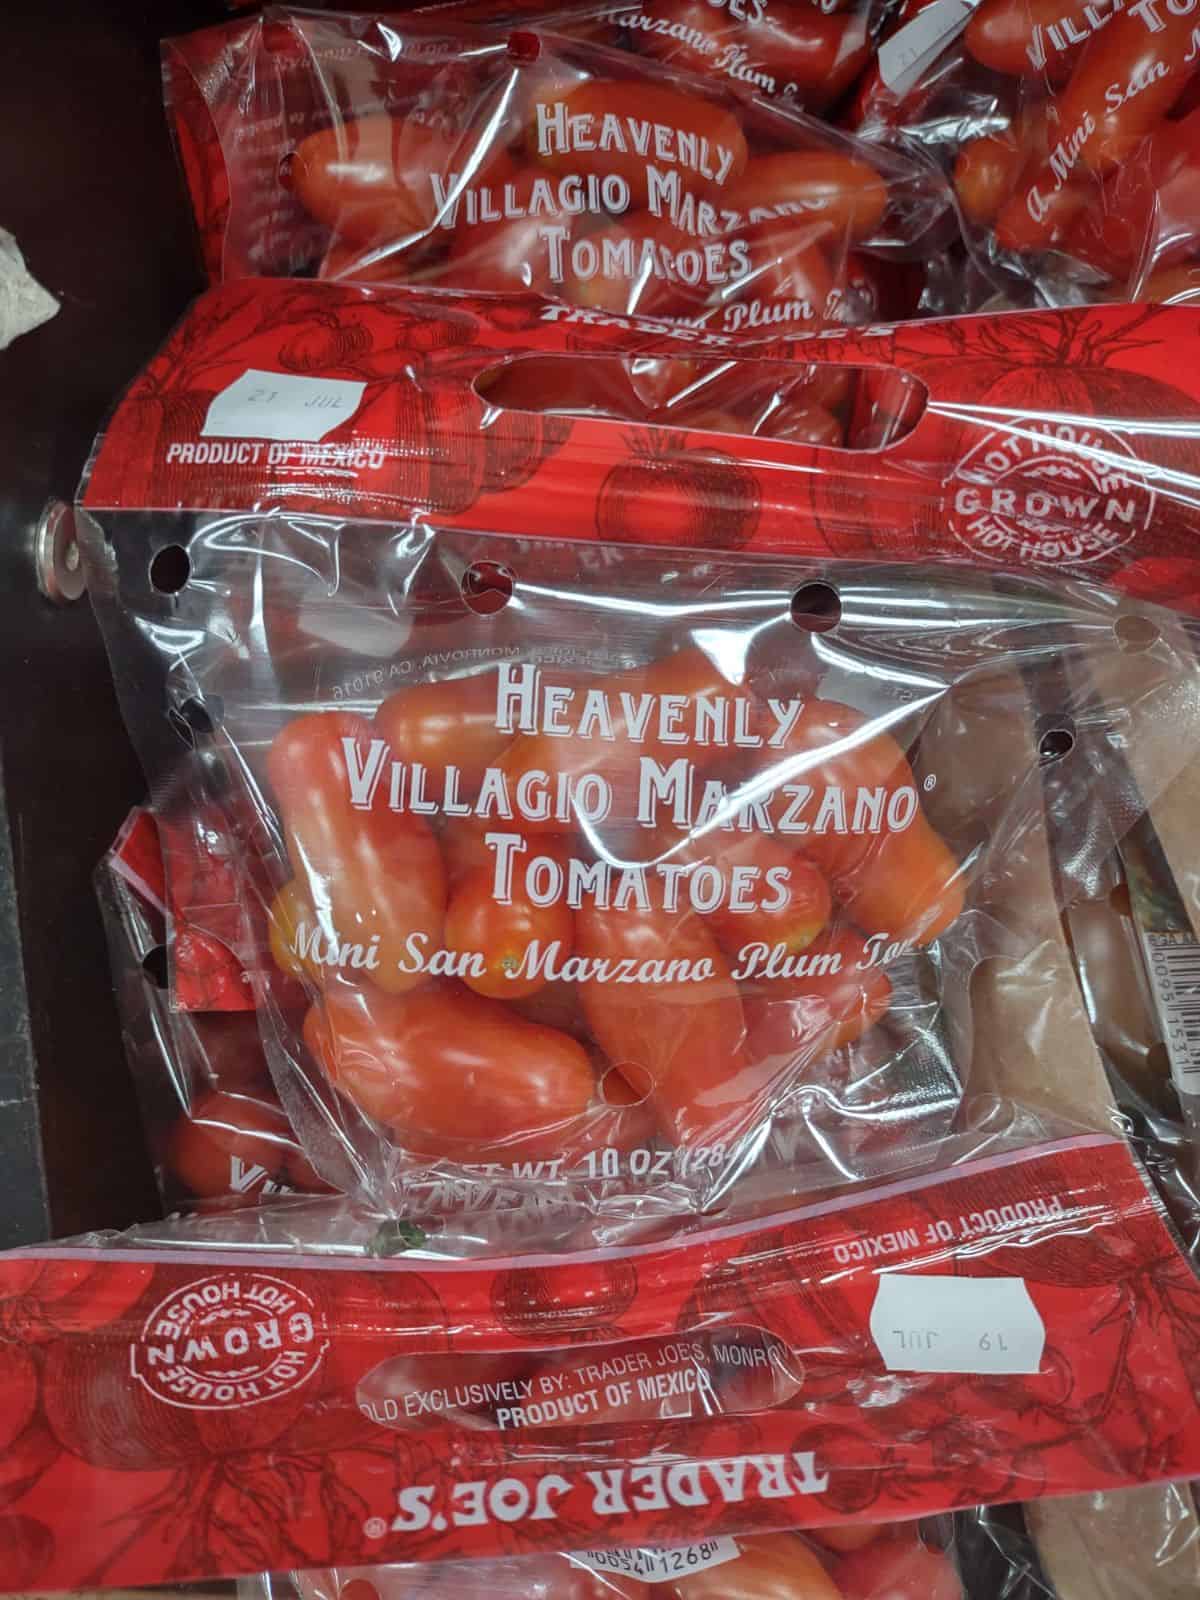 Bags of Heavenly Villagio Marzano Tomatoes at Trader Joe's